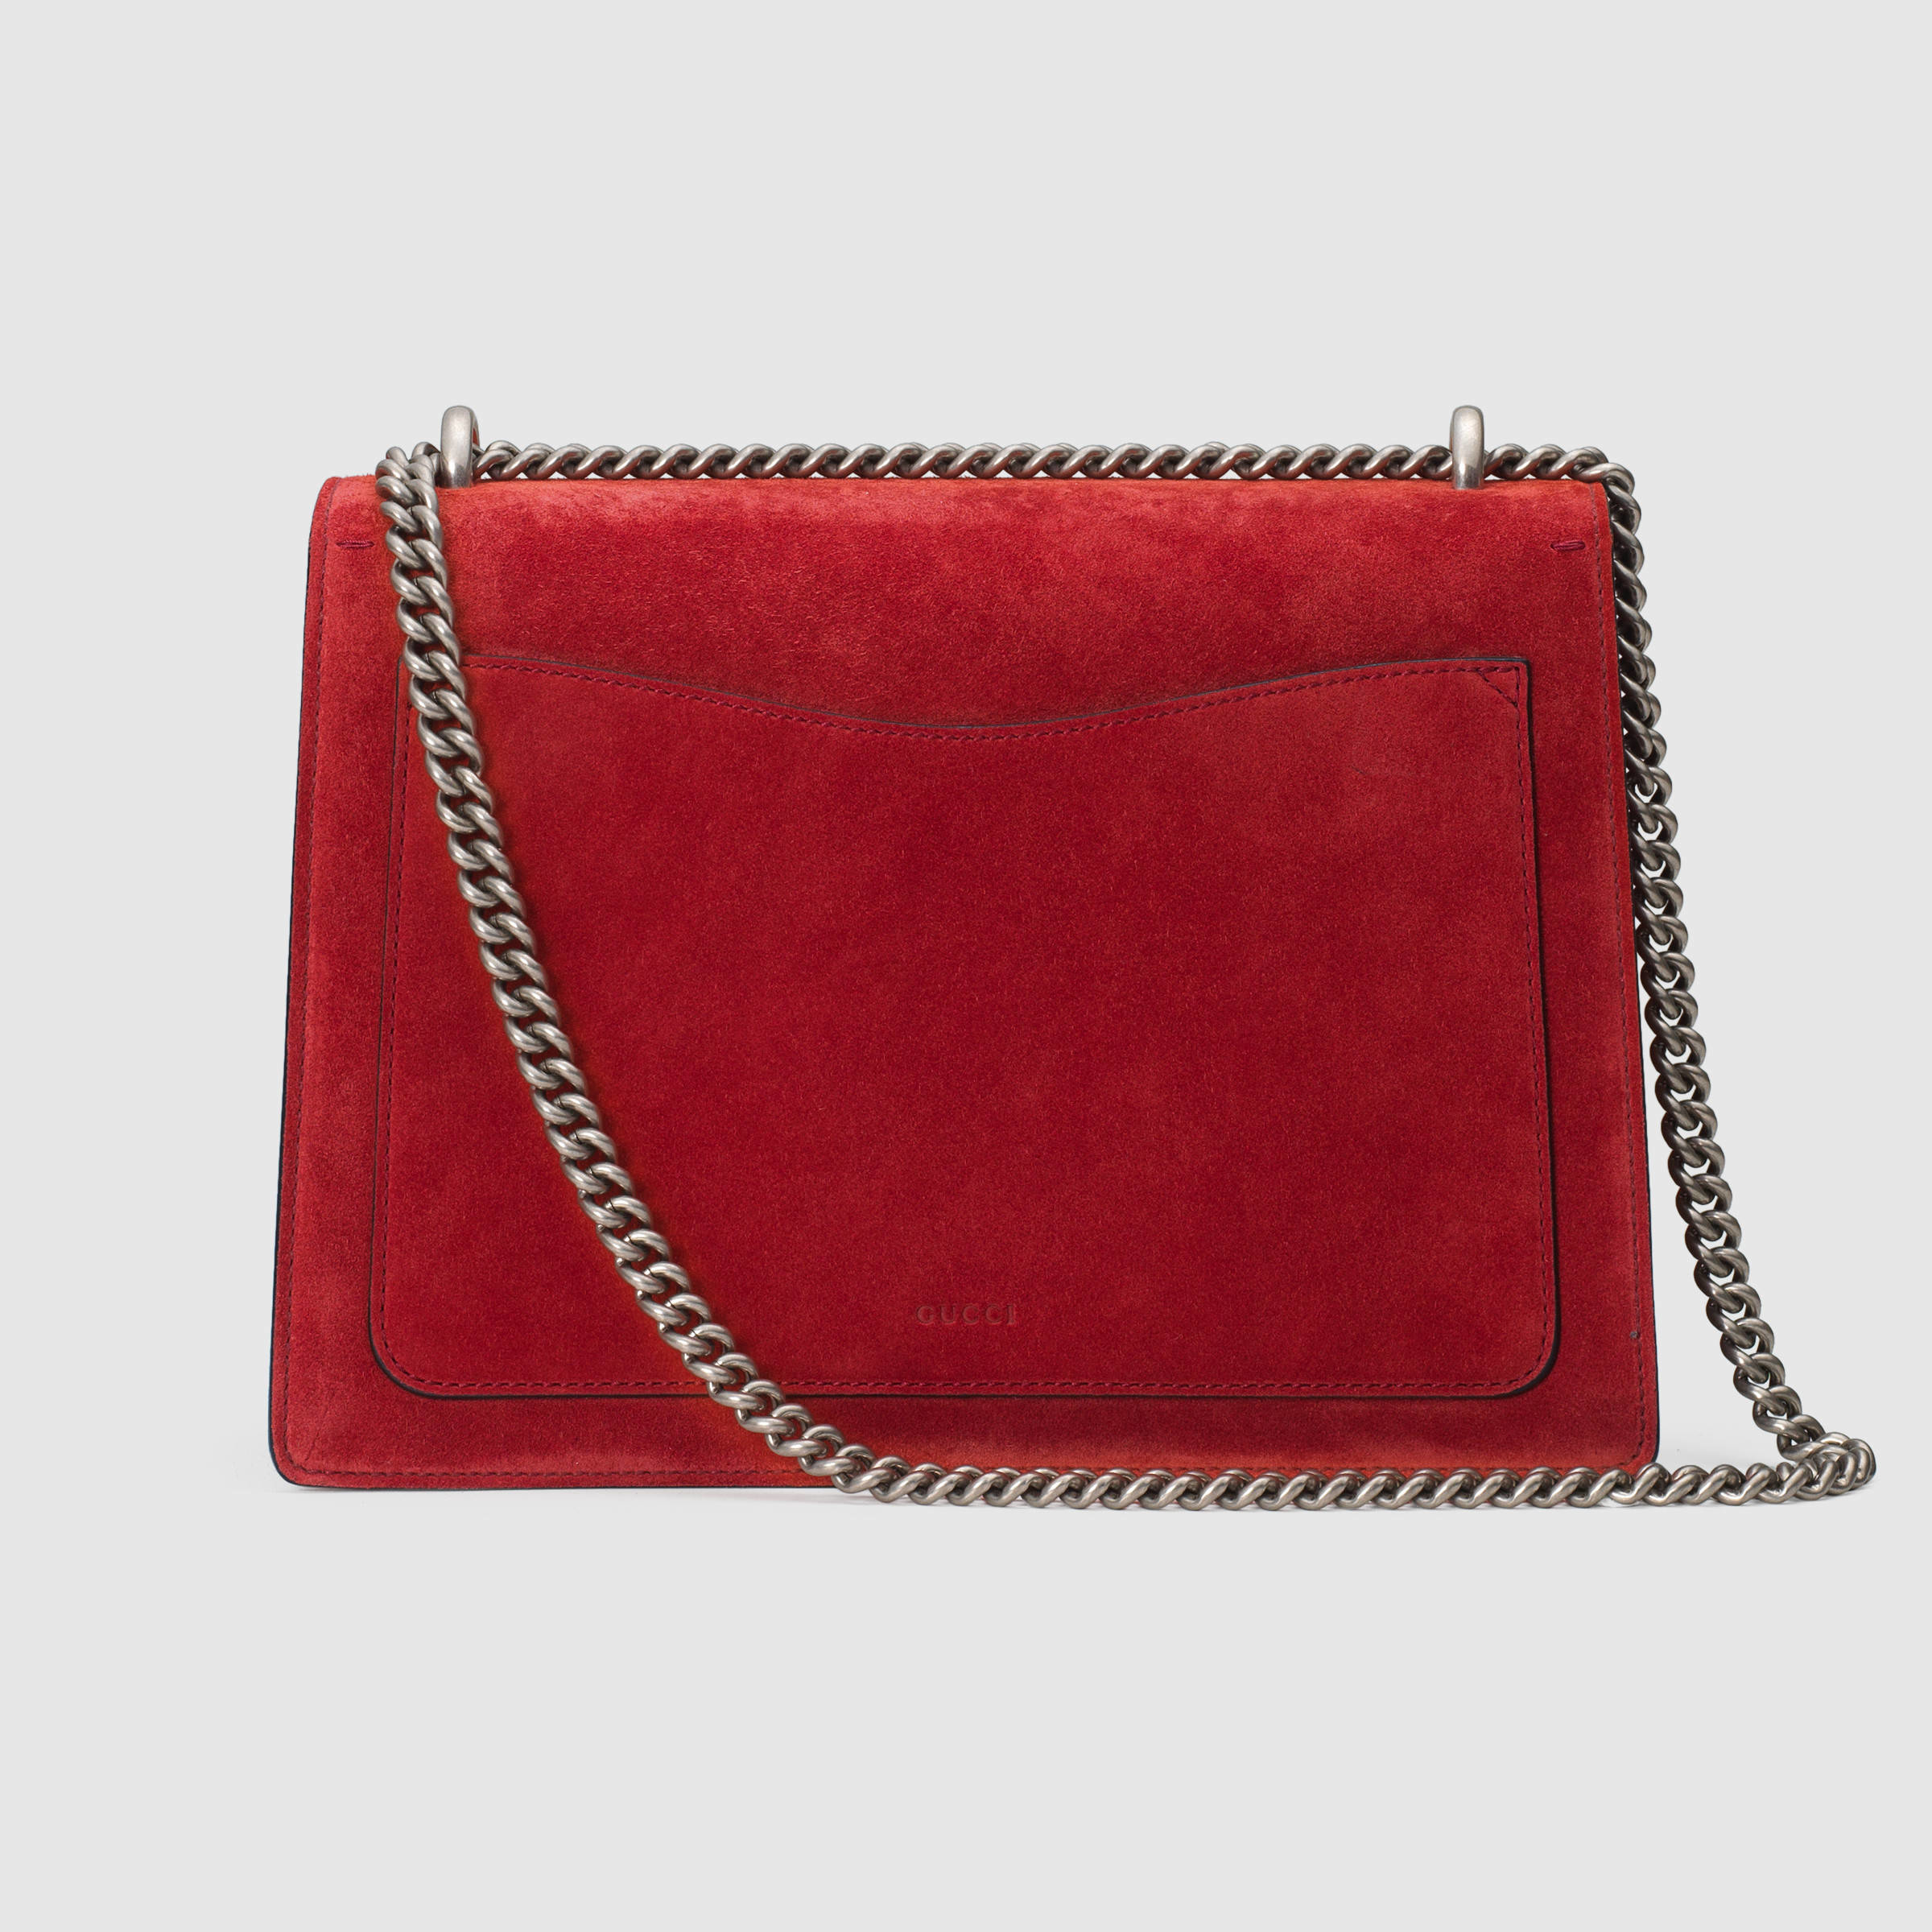 Gucci Dionysus Suede Shoulder Bag in Red - Lyst